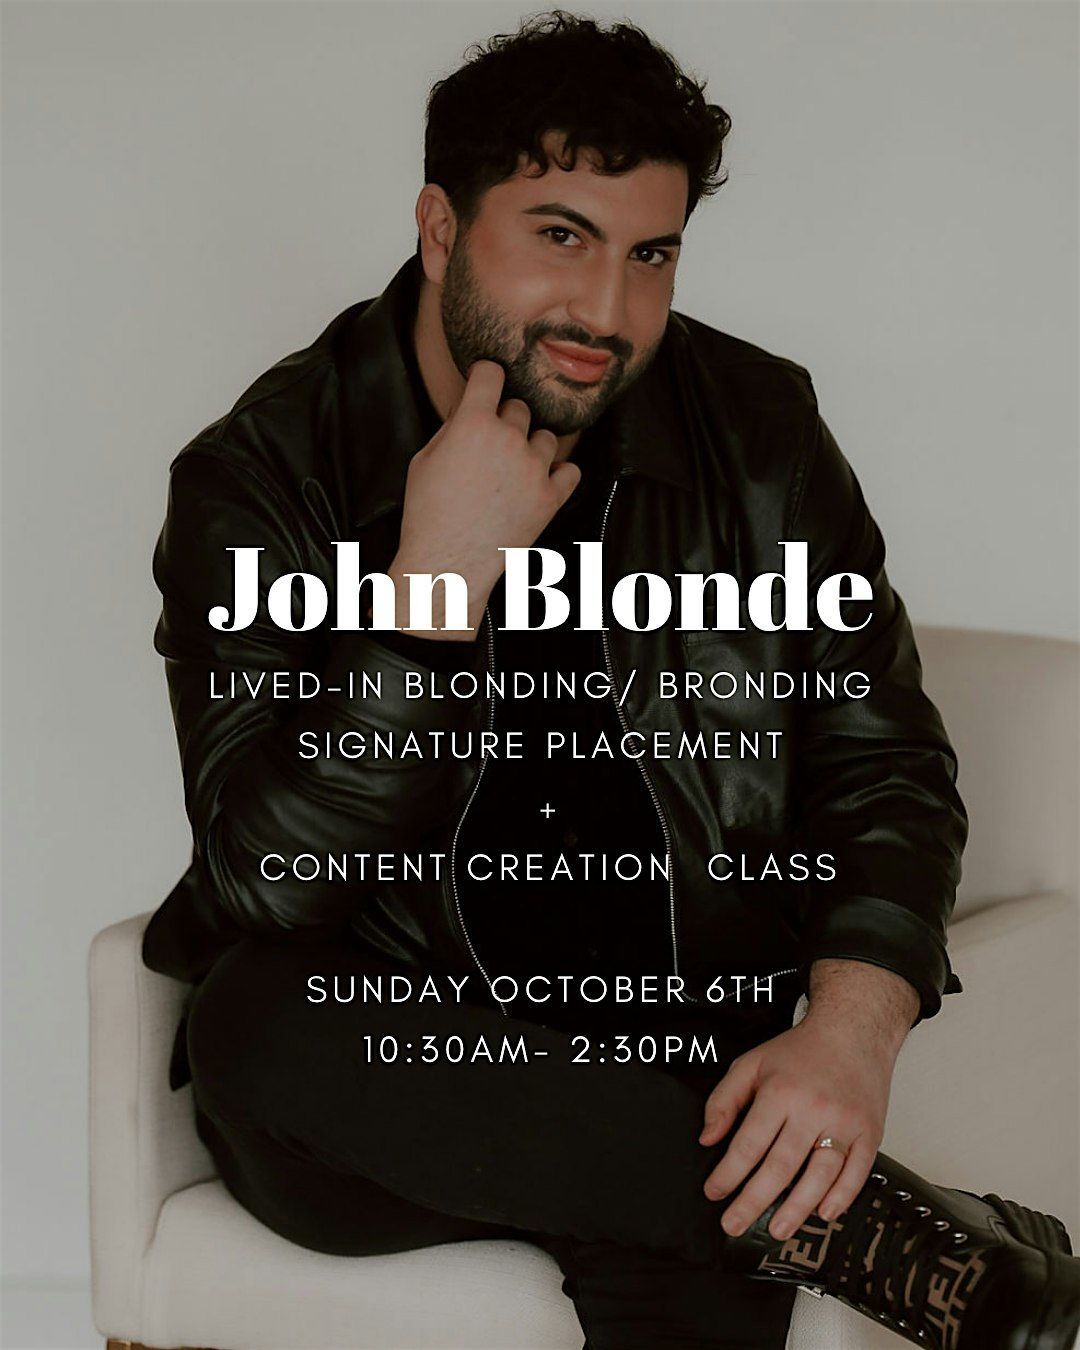 John Blonde Signature Placement + Content Creation